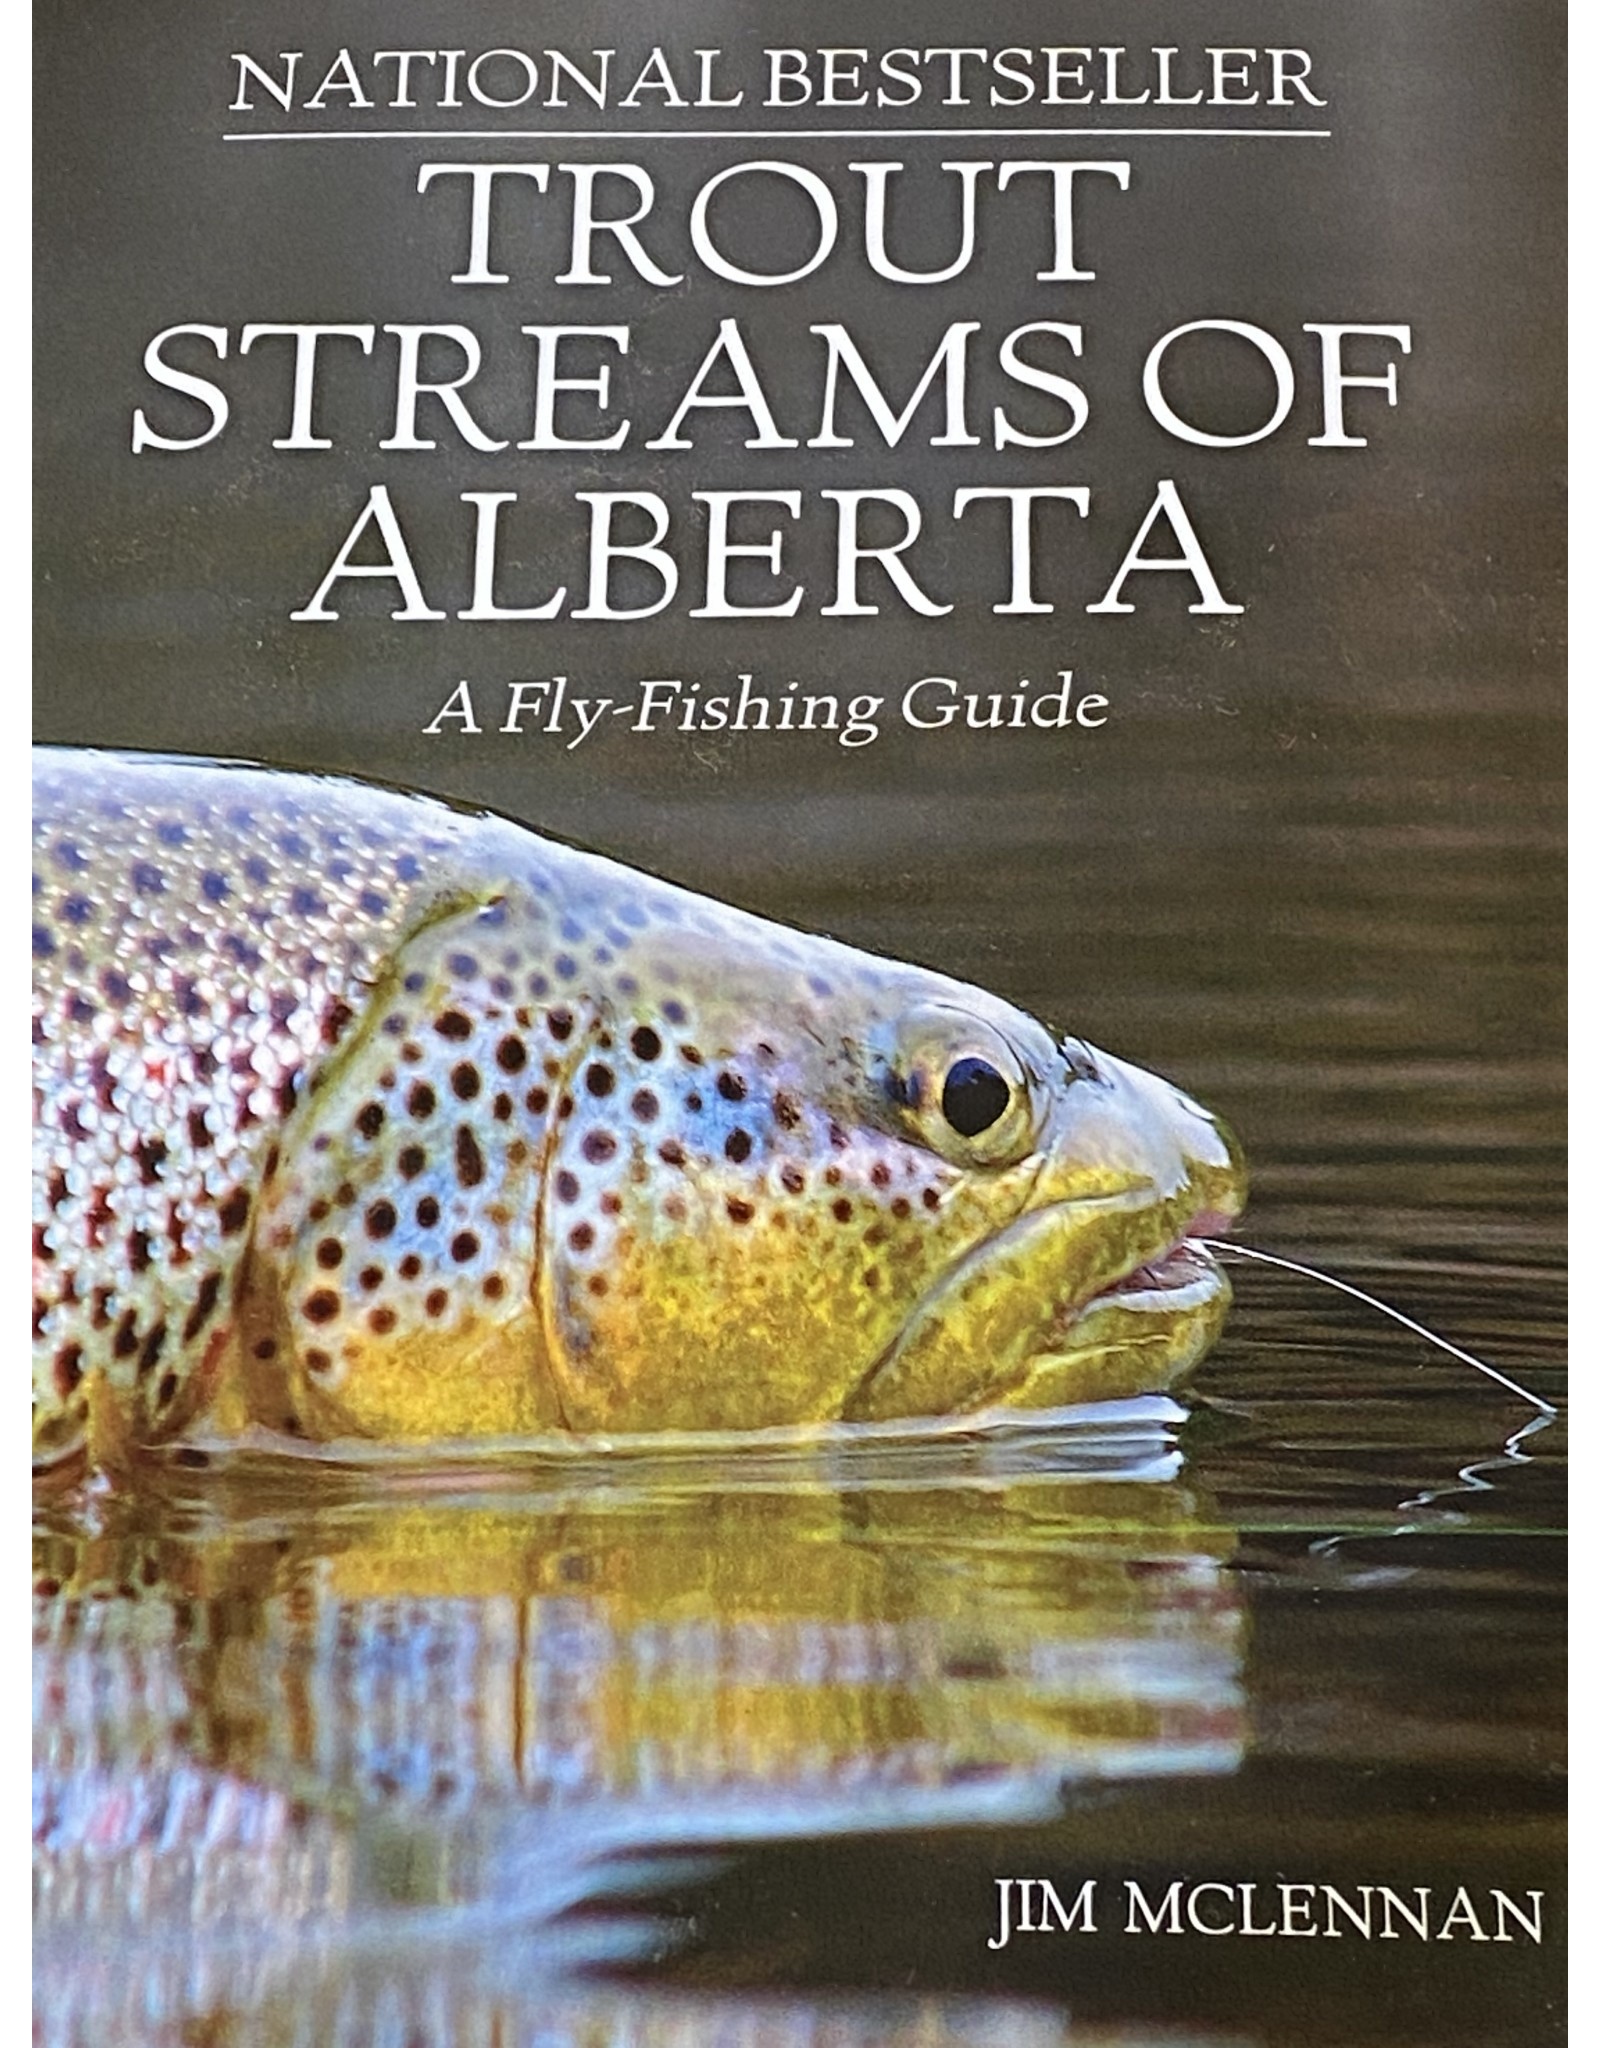 Trout Streams of Alberta by Jim McLennan